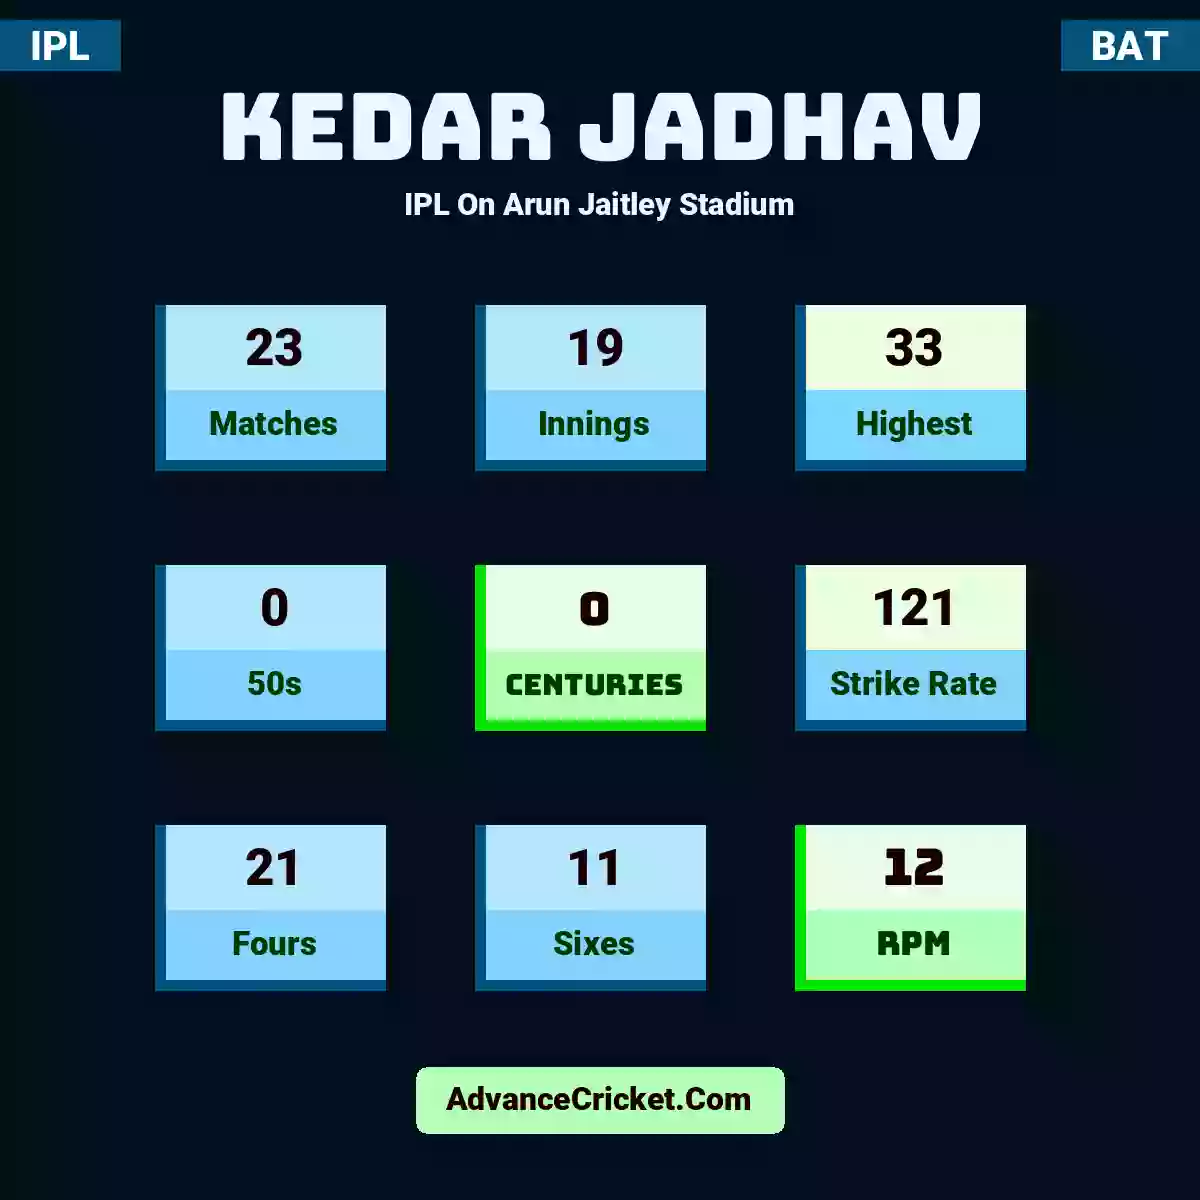 Kedar Jadhav IPL  On Arun Jaitley Stadium, Kedar Jadhav played 23 matches, scored 33 runs as highest, 0 half-centuries, and 0 centuries, with a strike rate of 121. K.Jadhav hit 21 fours and 11 sixes, with an RPM of 12.